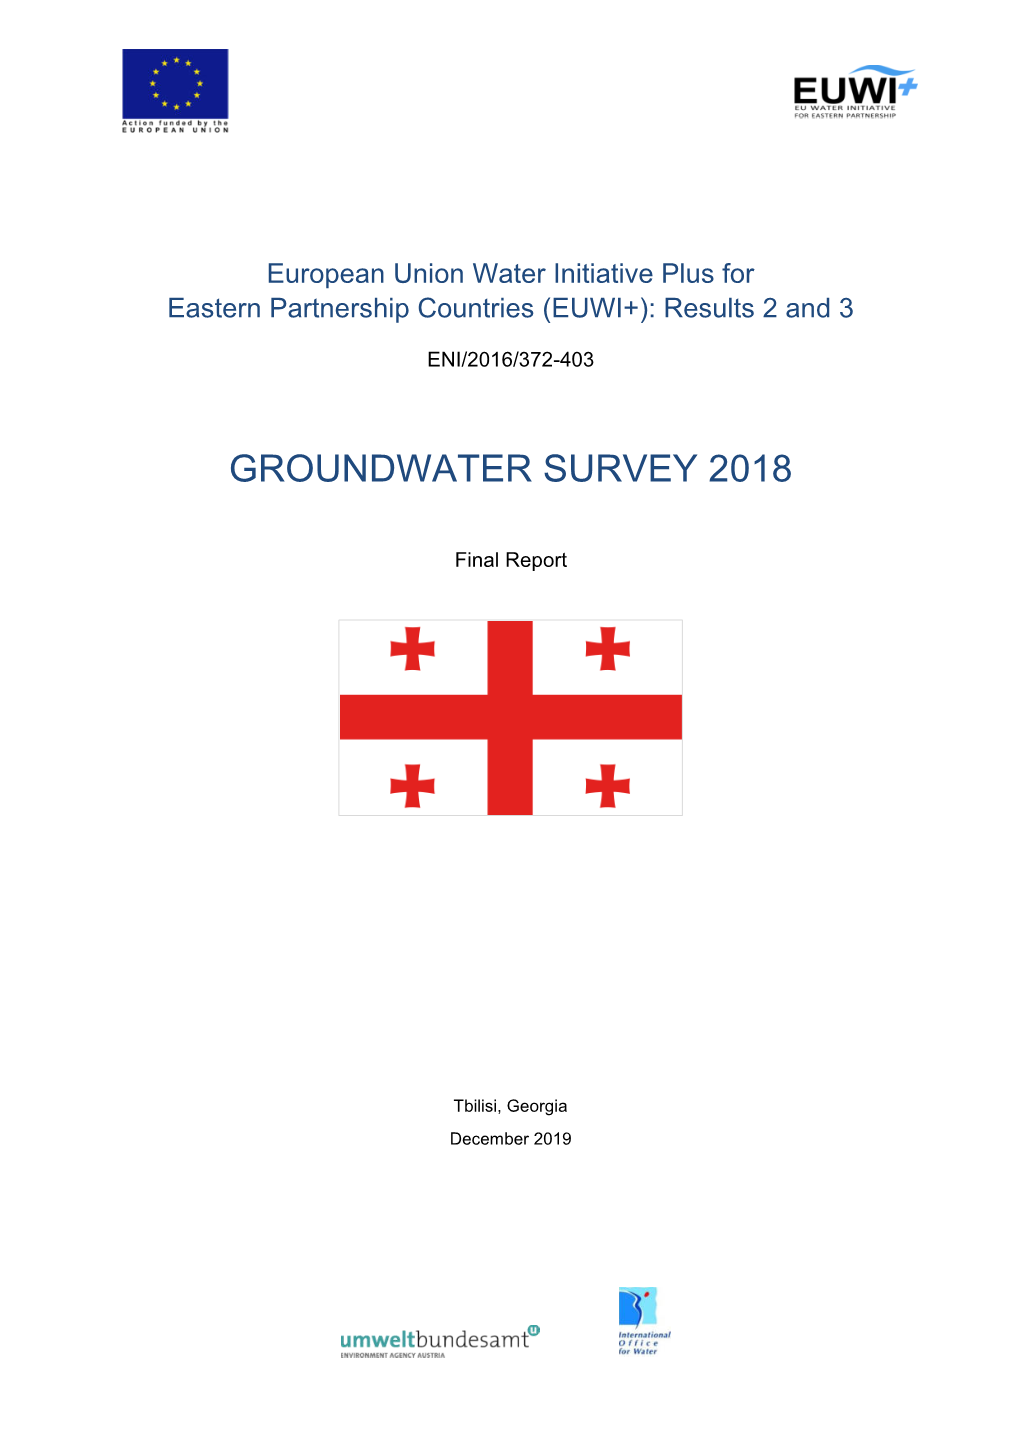 Groundwater Survey 2018